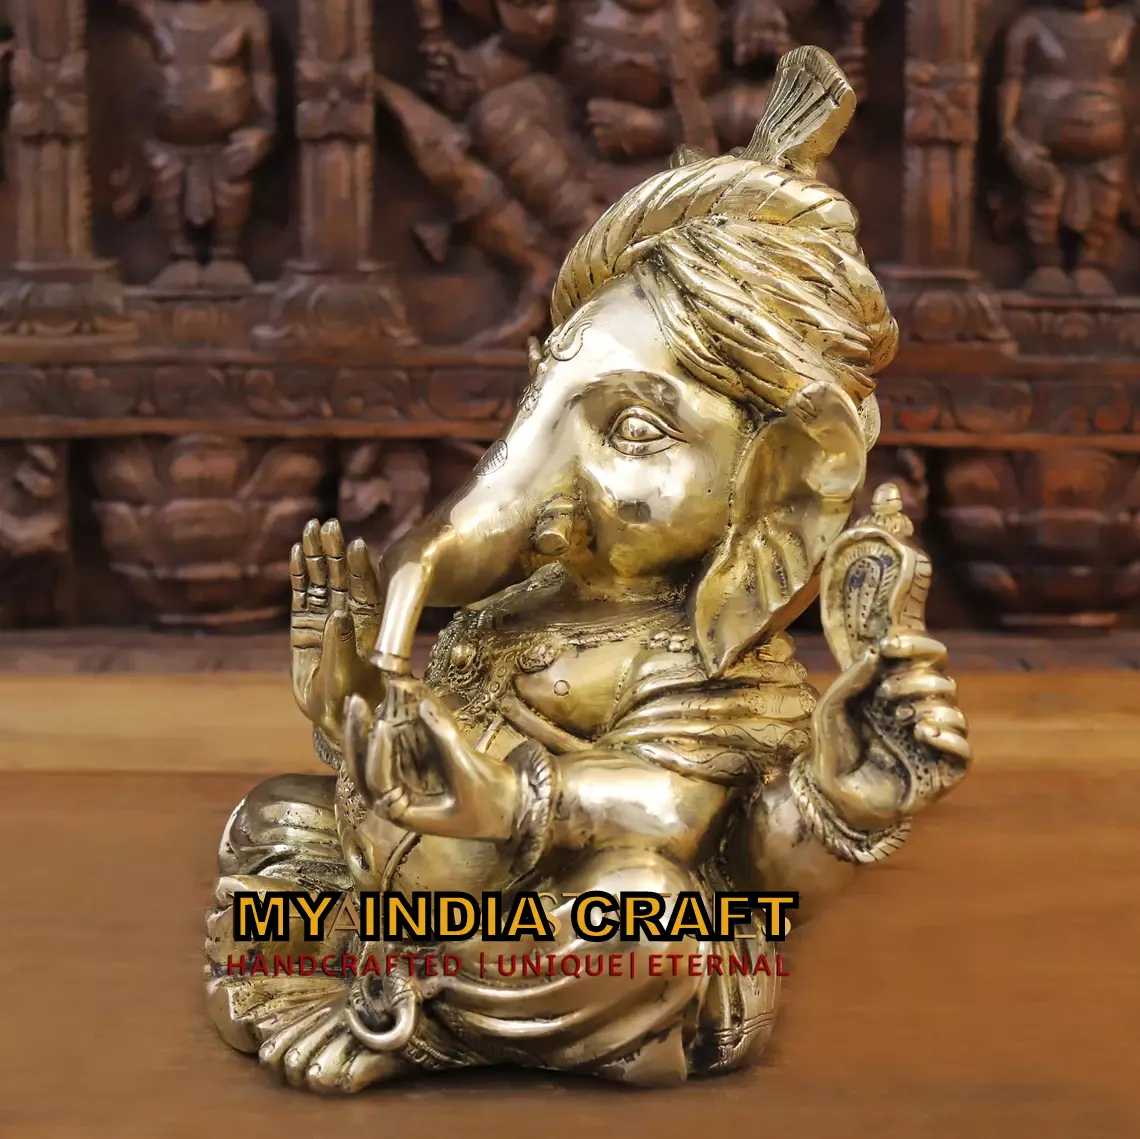 14" paghdi Ganesh statue